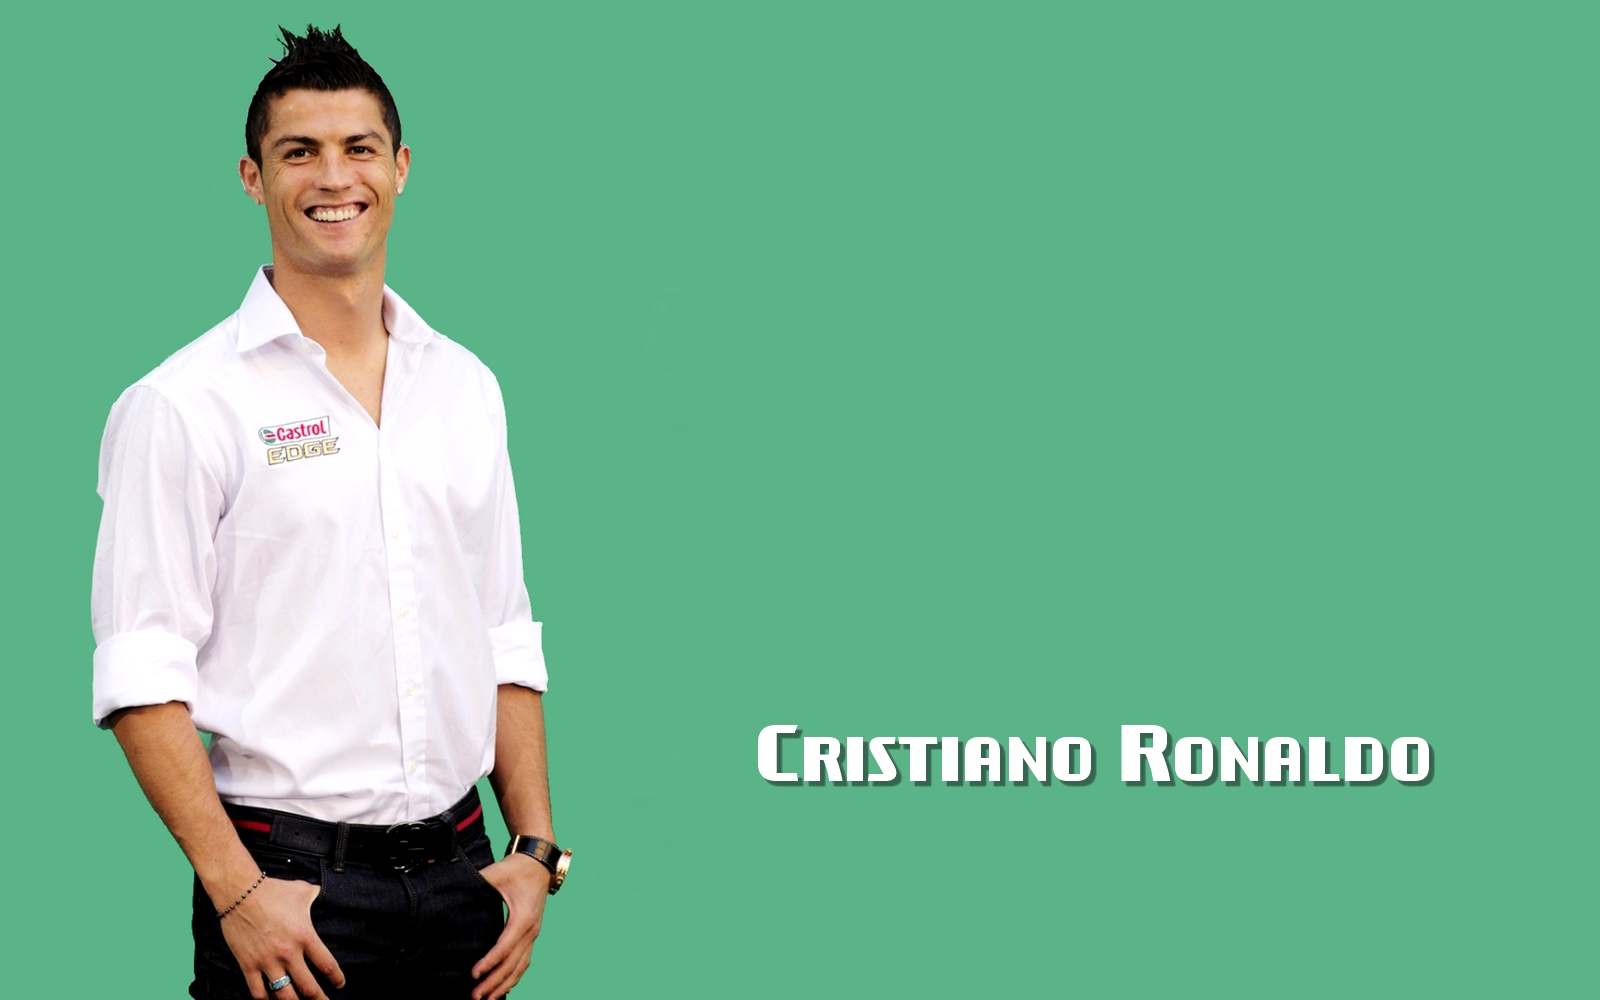 https://blogger.googleusercontent.com/img/b/R29vZ2xl/AVvXsEjv_z9e0nd1akplIw6psuRLyX-7qkajgZI5v6Vv2Tv3i4e9LUIVINqOSriCoQrpHLlAtyNqk6ZDVrX9ChVBcn7pgegMyRwFnRdxu73D7dhevNWbqpsq6m8LC6HhuUKkzenjyRPeaXxnnBU/s1600/Cristiano+Ronaldo+Wallpaper+05.jpg